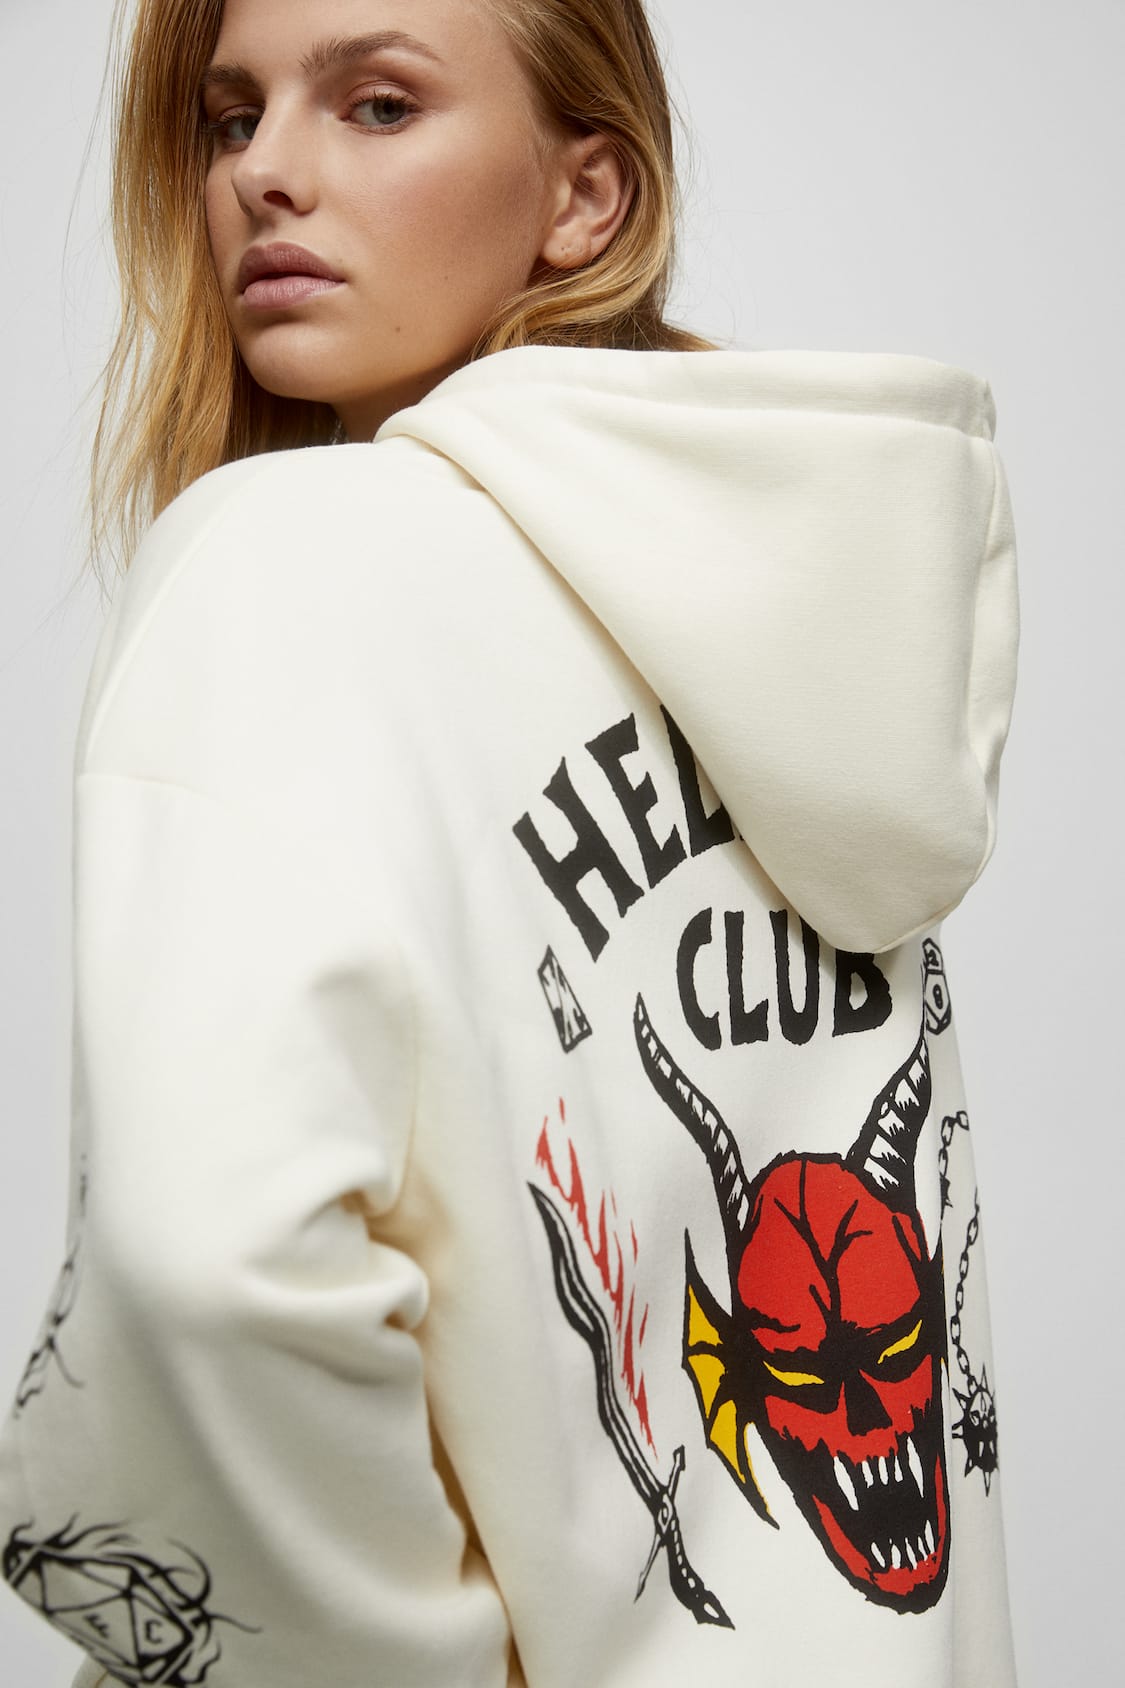 Meandro Pasteles delicadeza Stranger Things Hellfire Club graphic hoodie - pull&bear